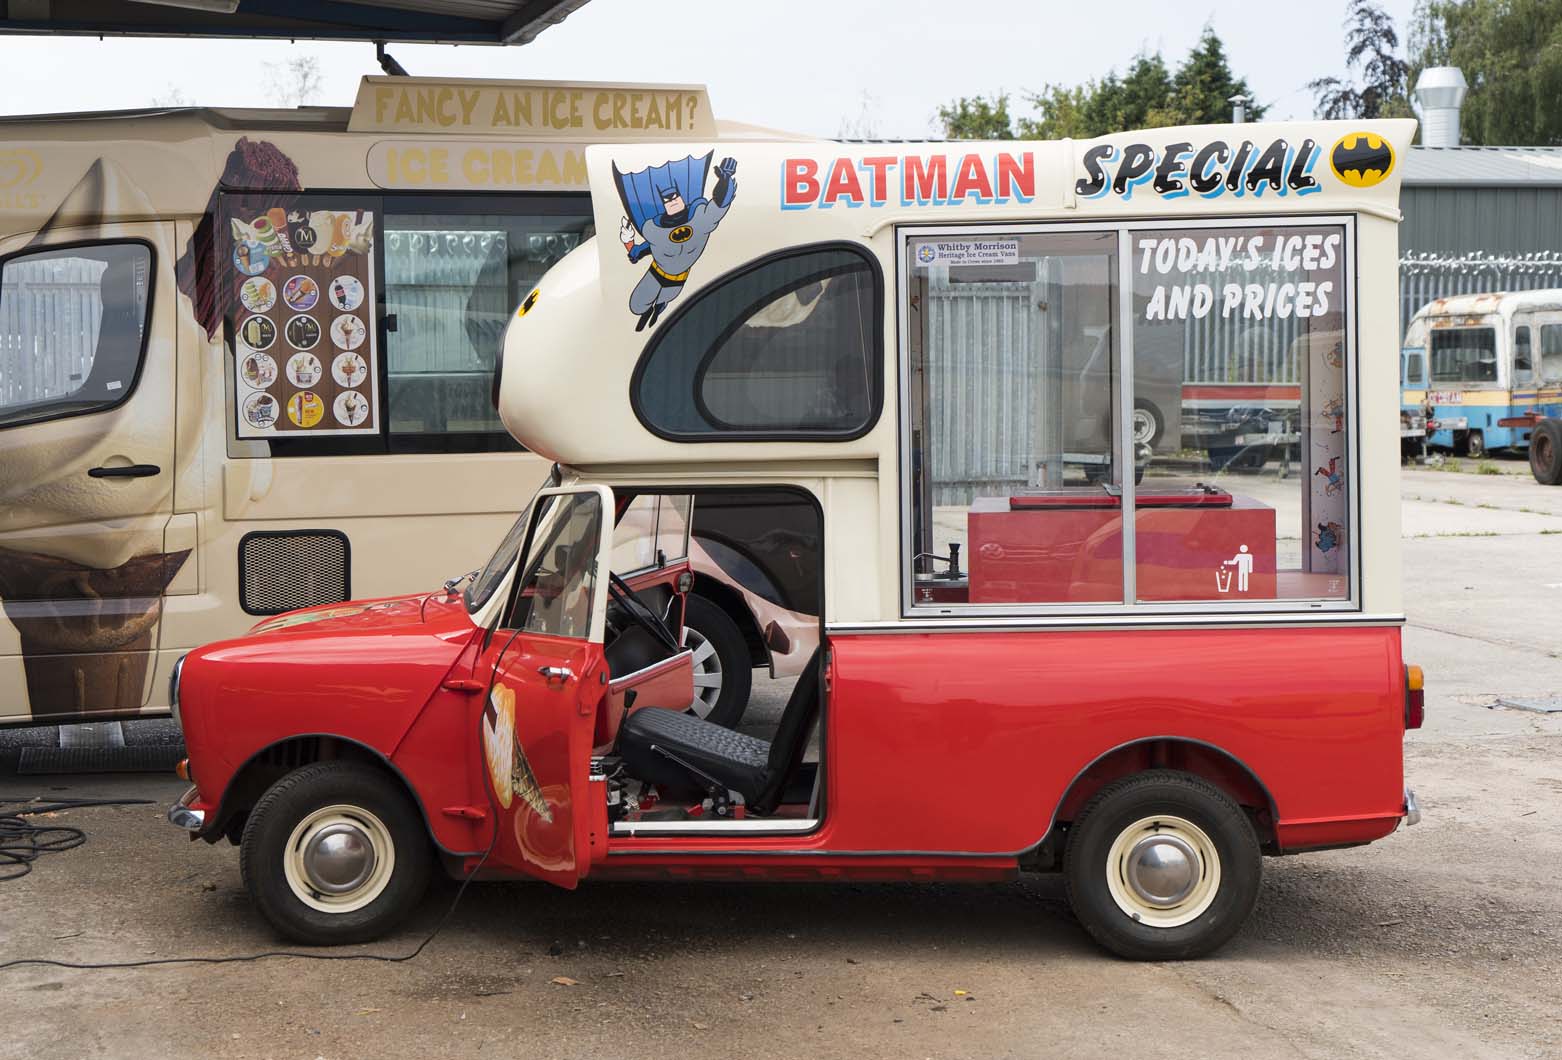 british ice cream van